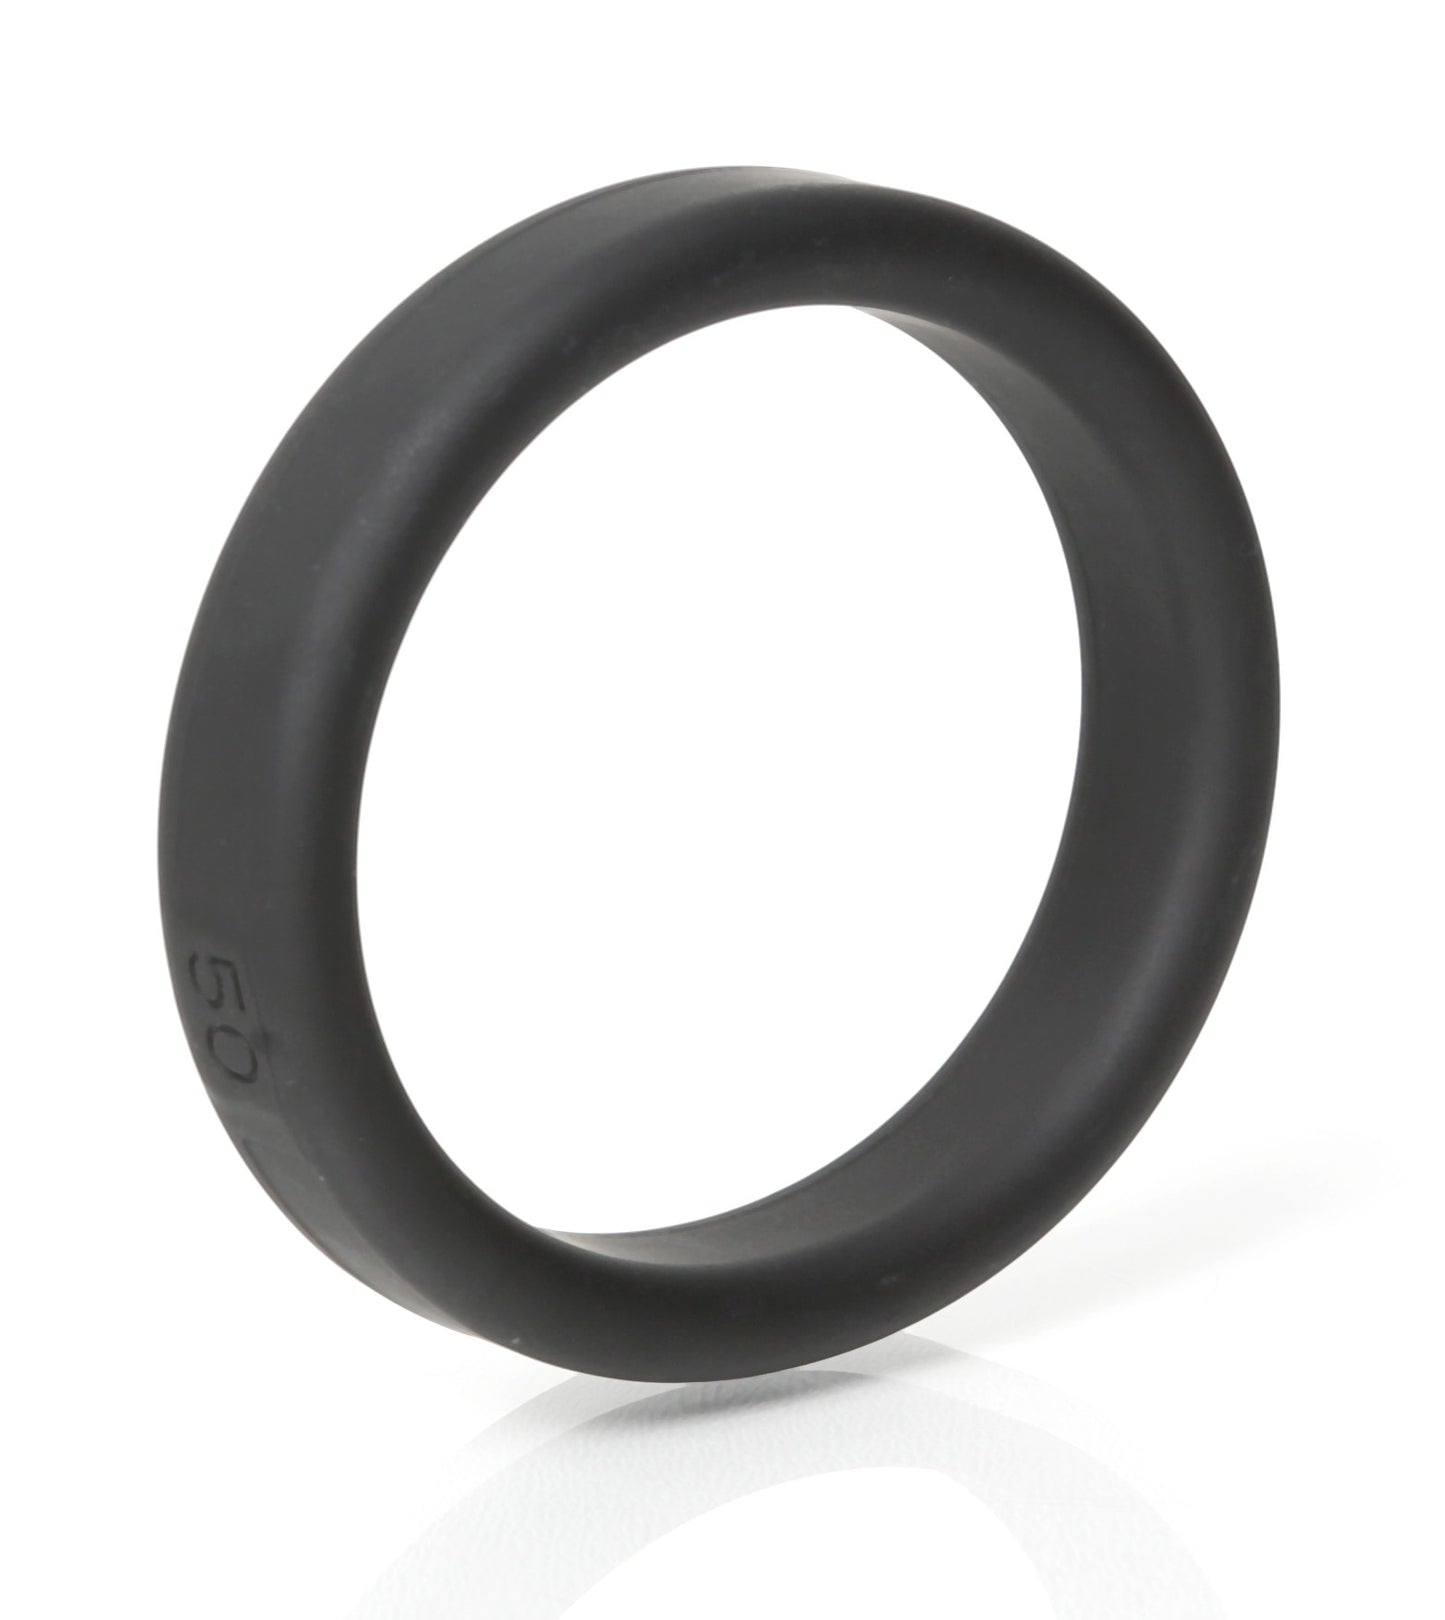 Boneyard Silicone Ring 50mm - Black BY-0150